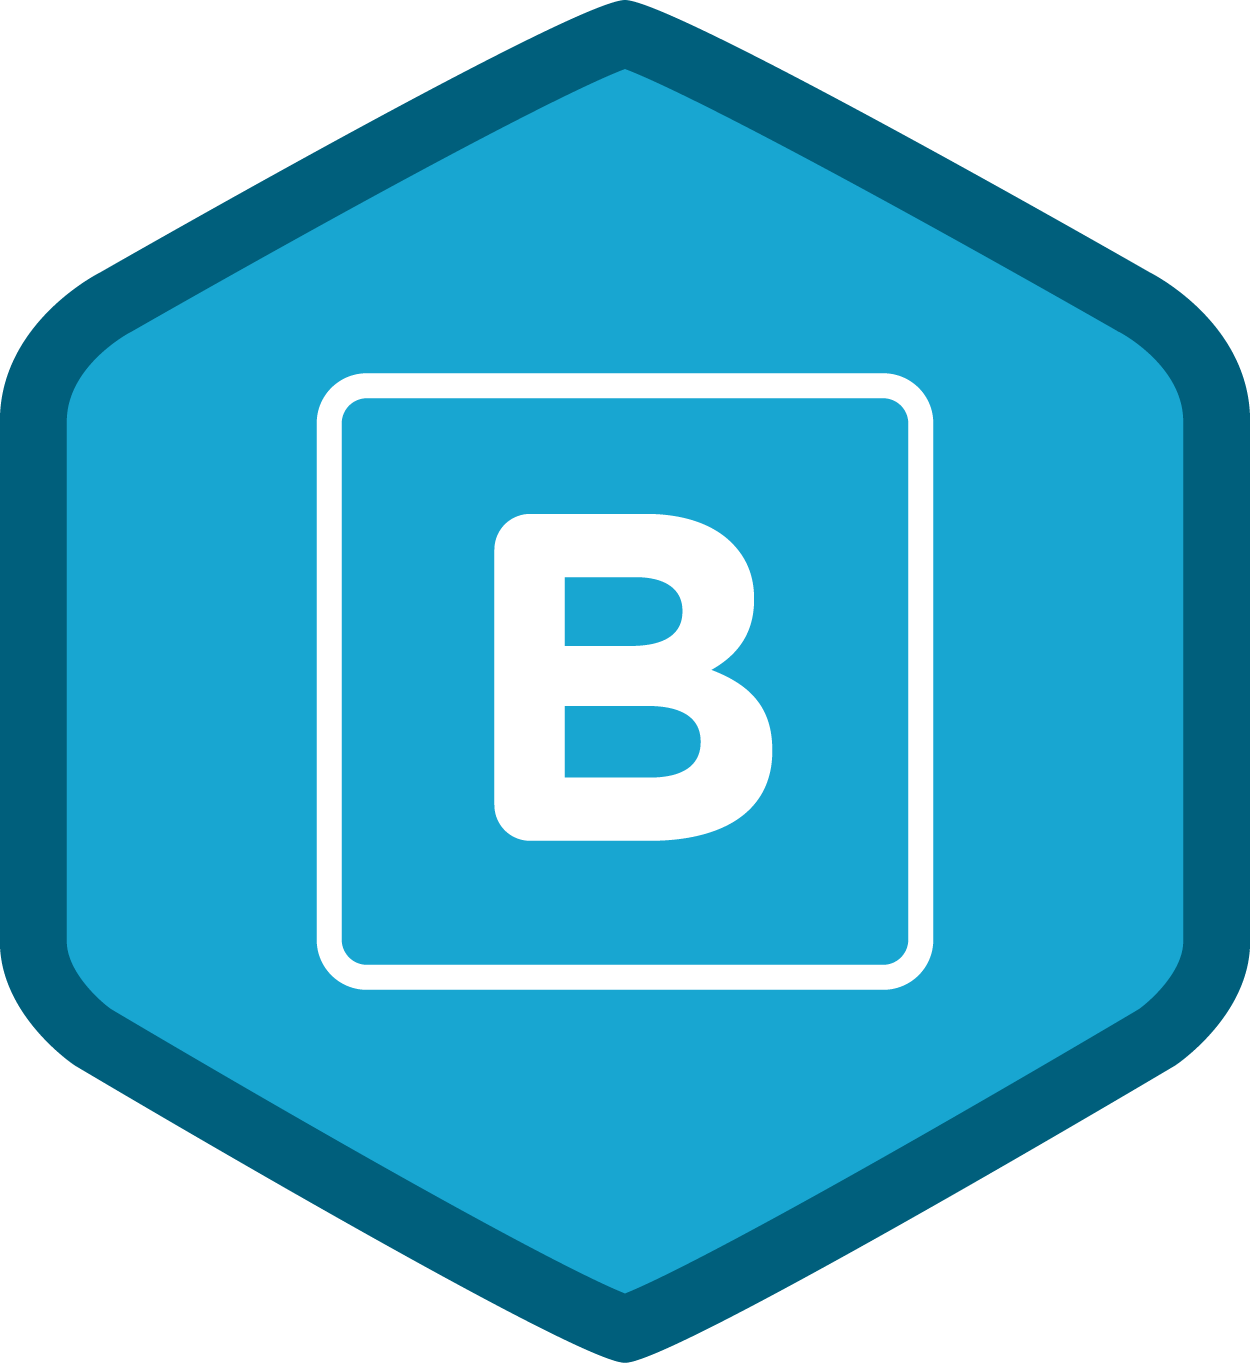 Bootstrap 4 Basics Course